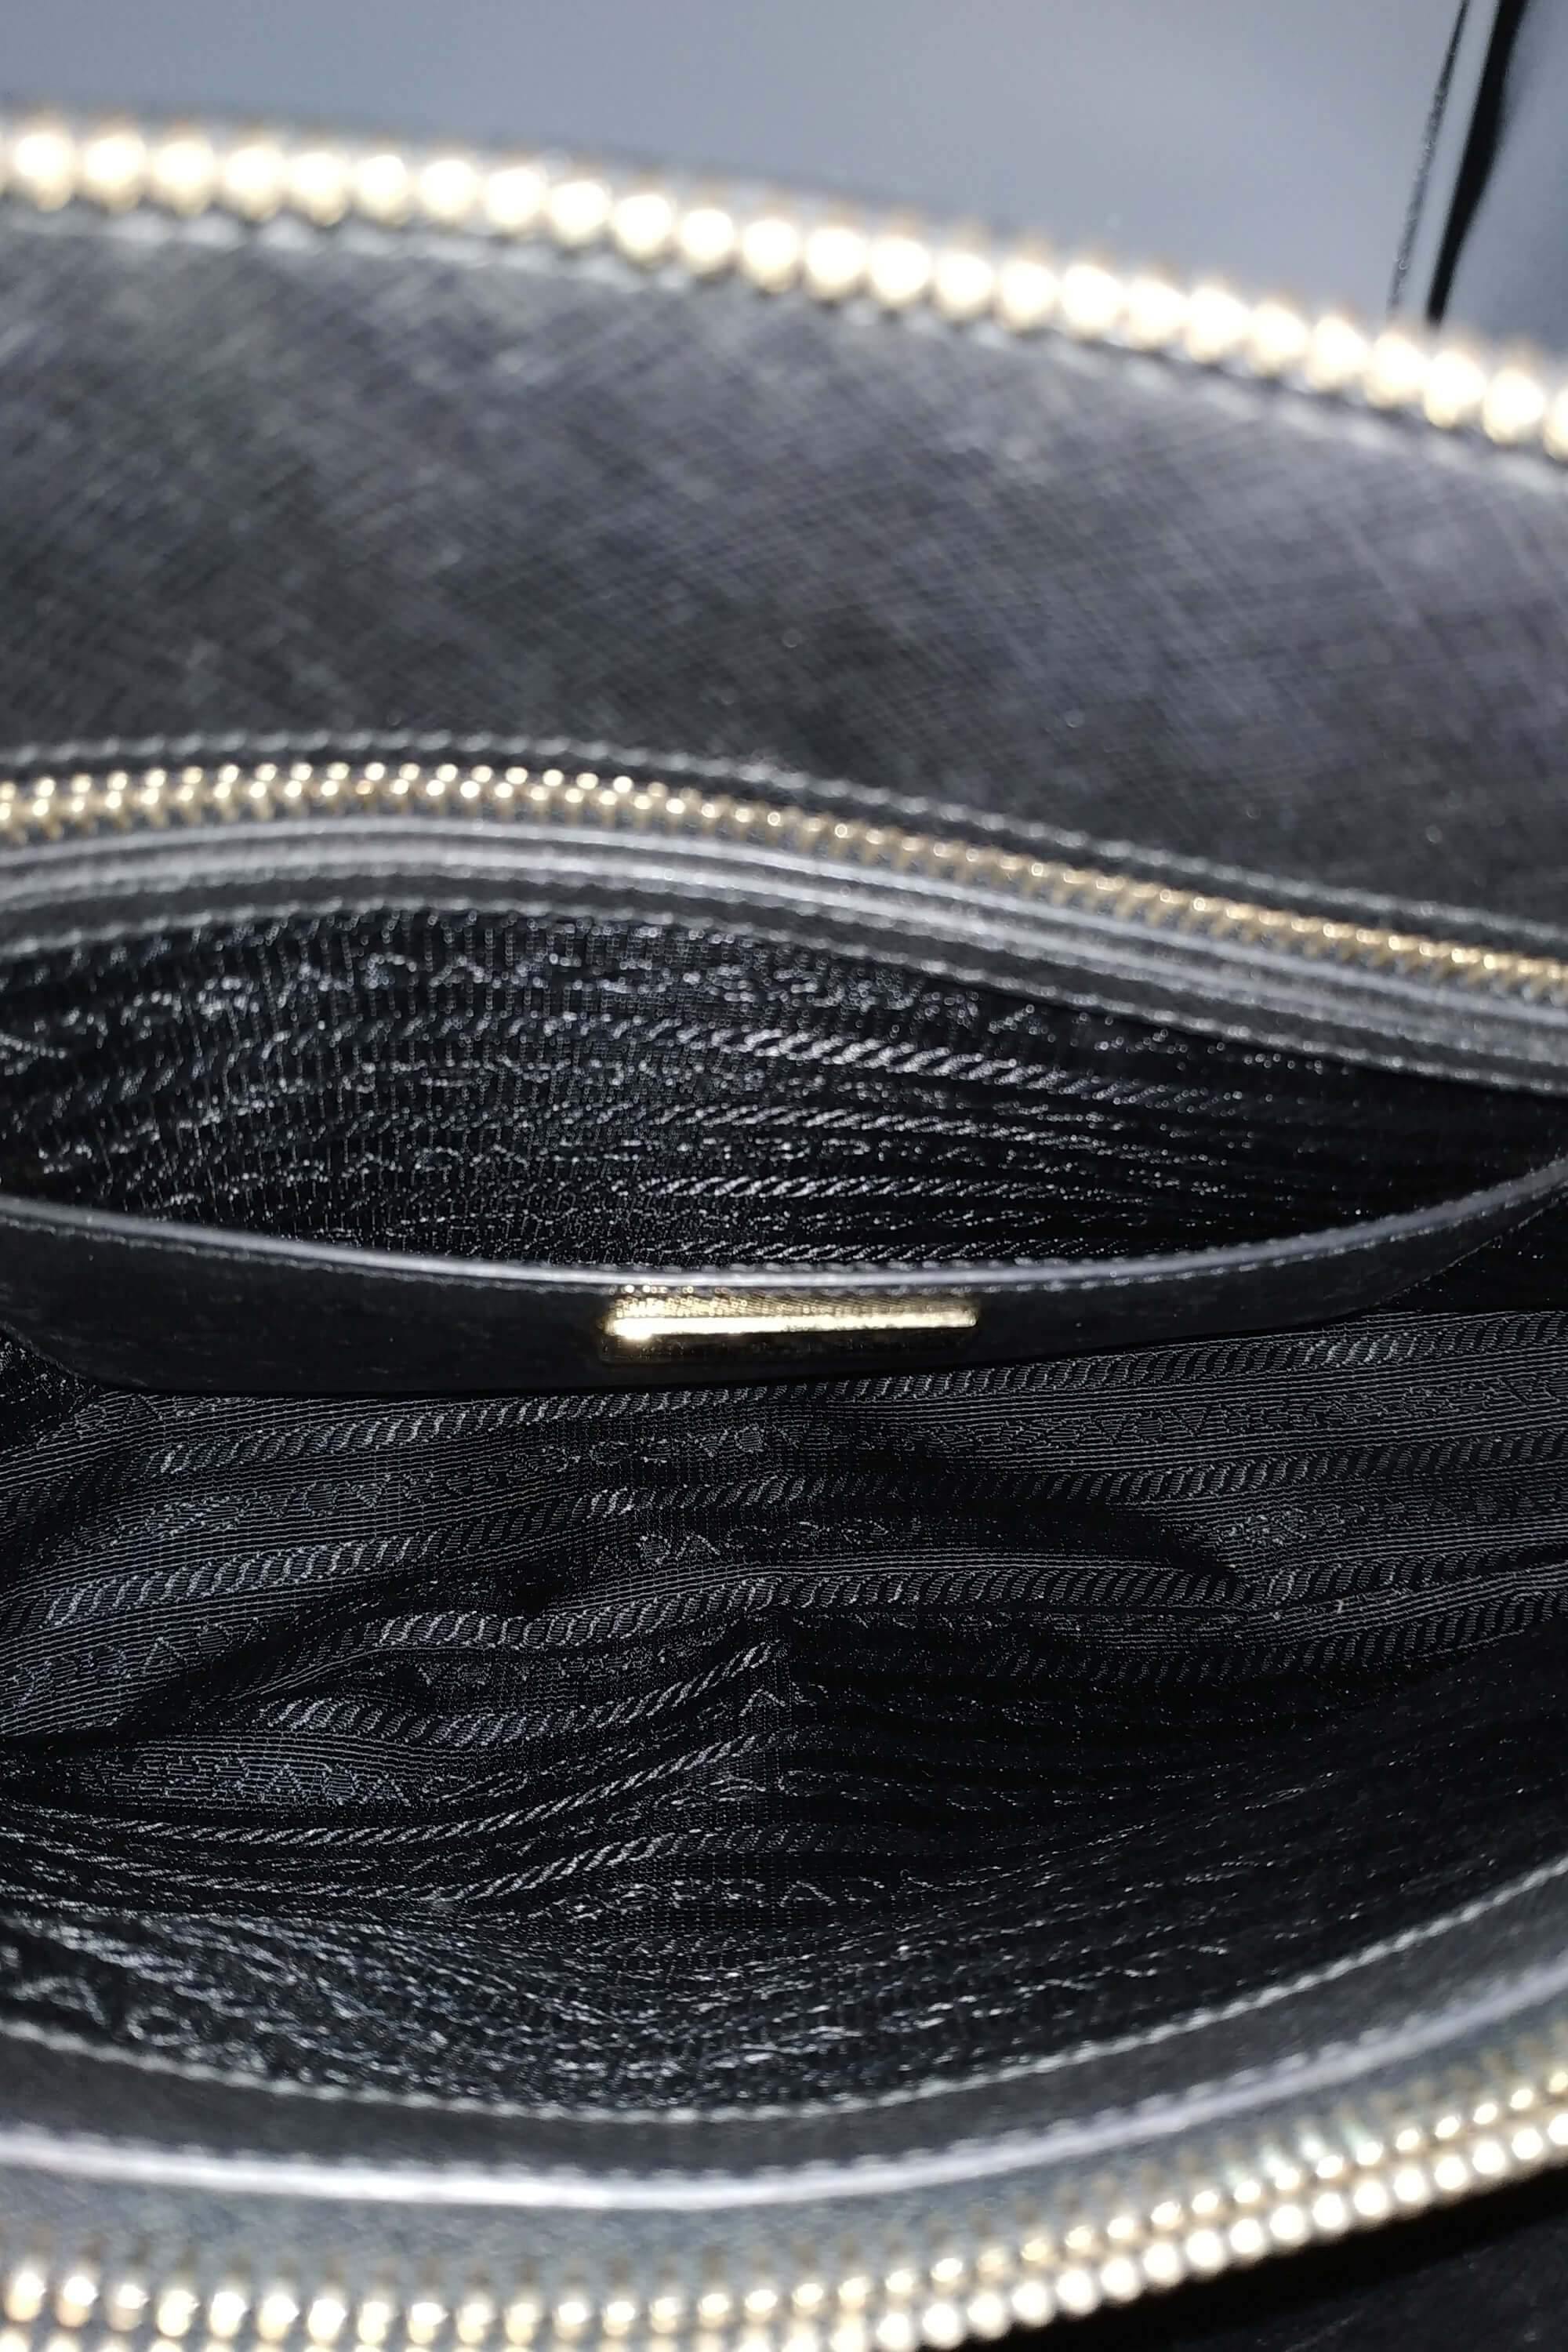 Saffiano Lux Promenade Medium 1BA002 – Keeks Designer Handbags